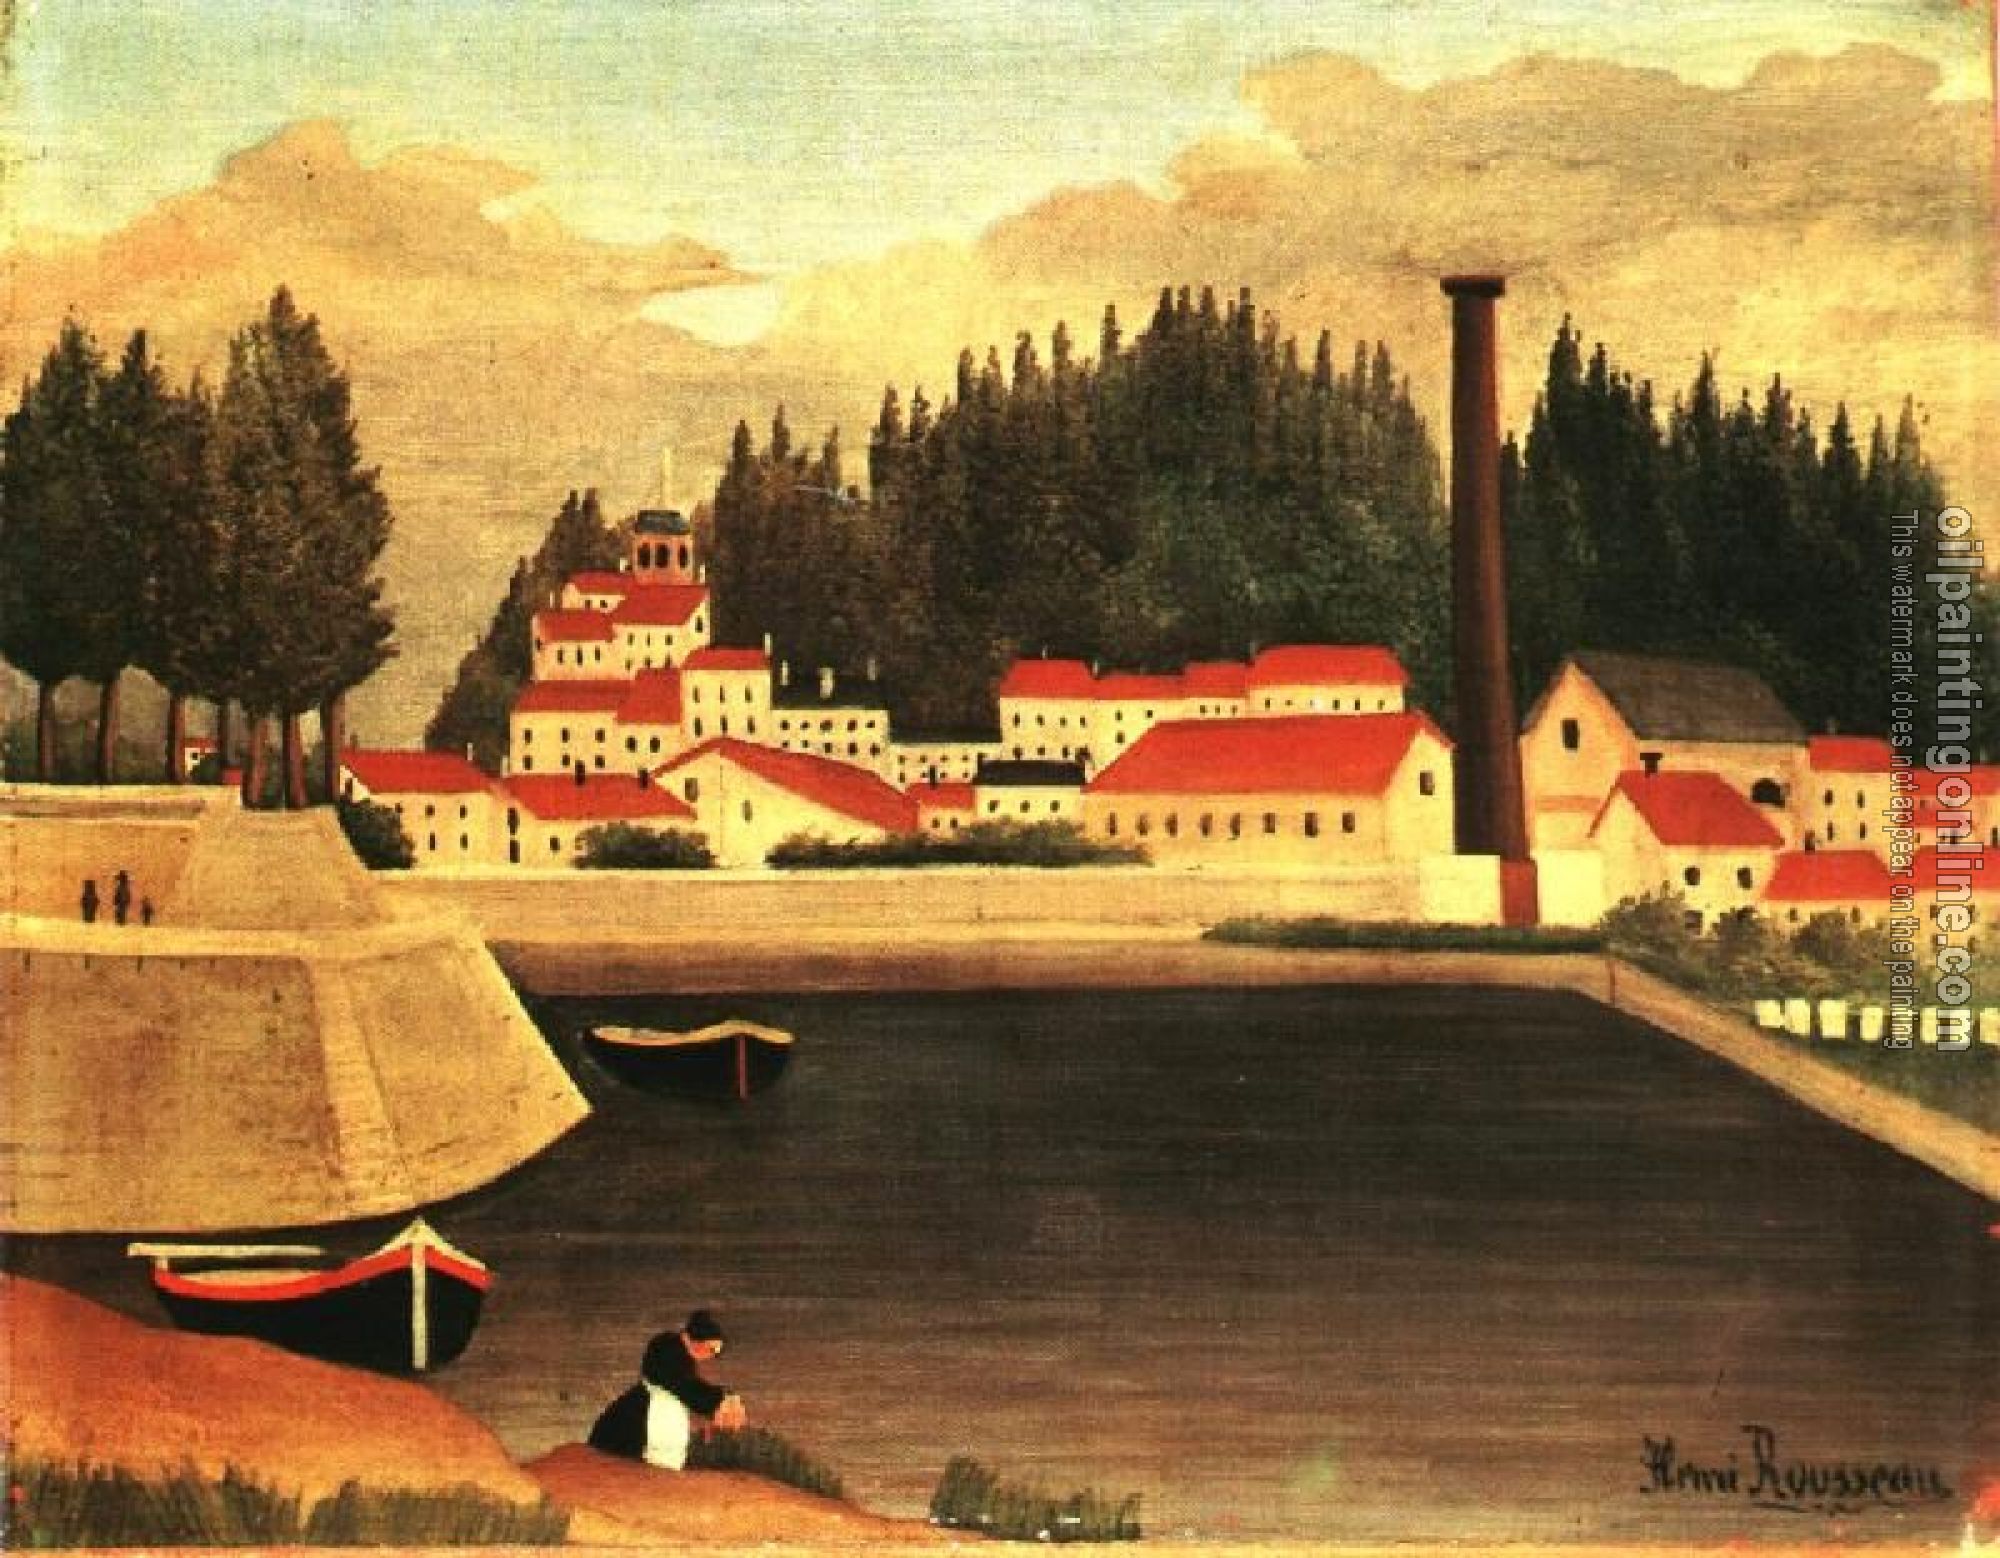 Henri Rousseau - Village near a Factory